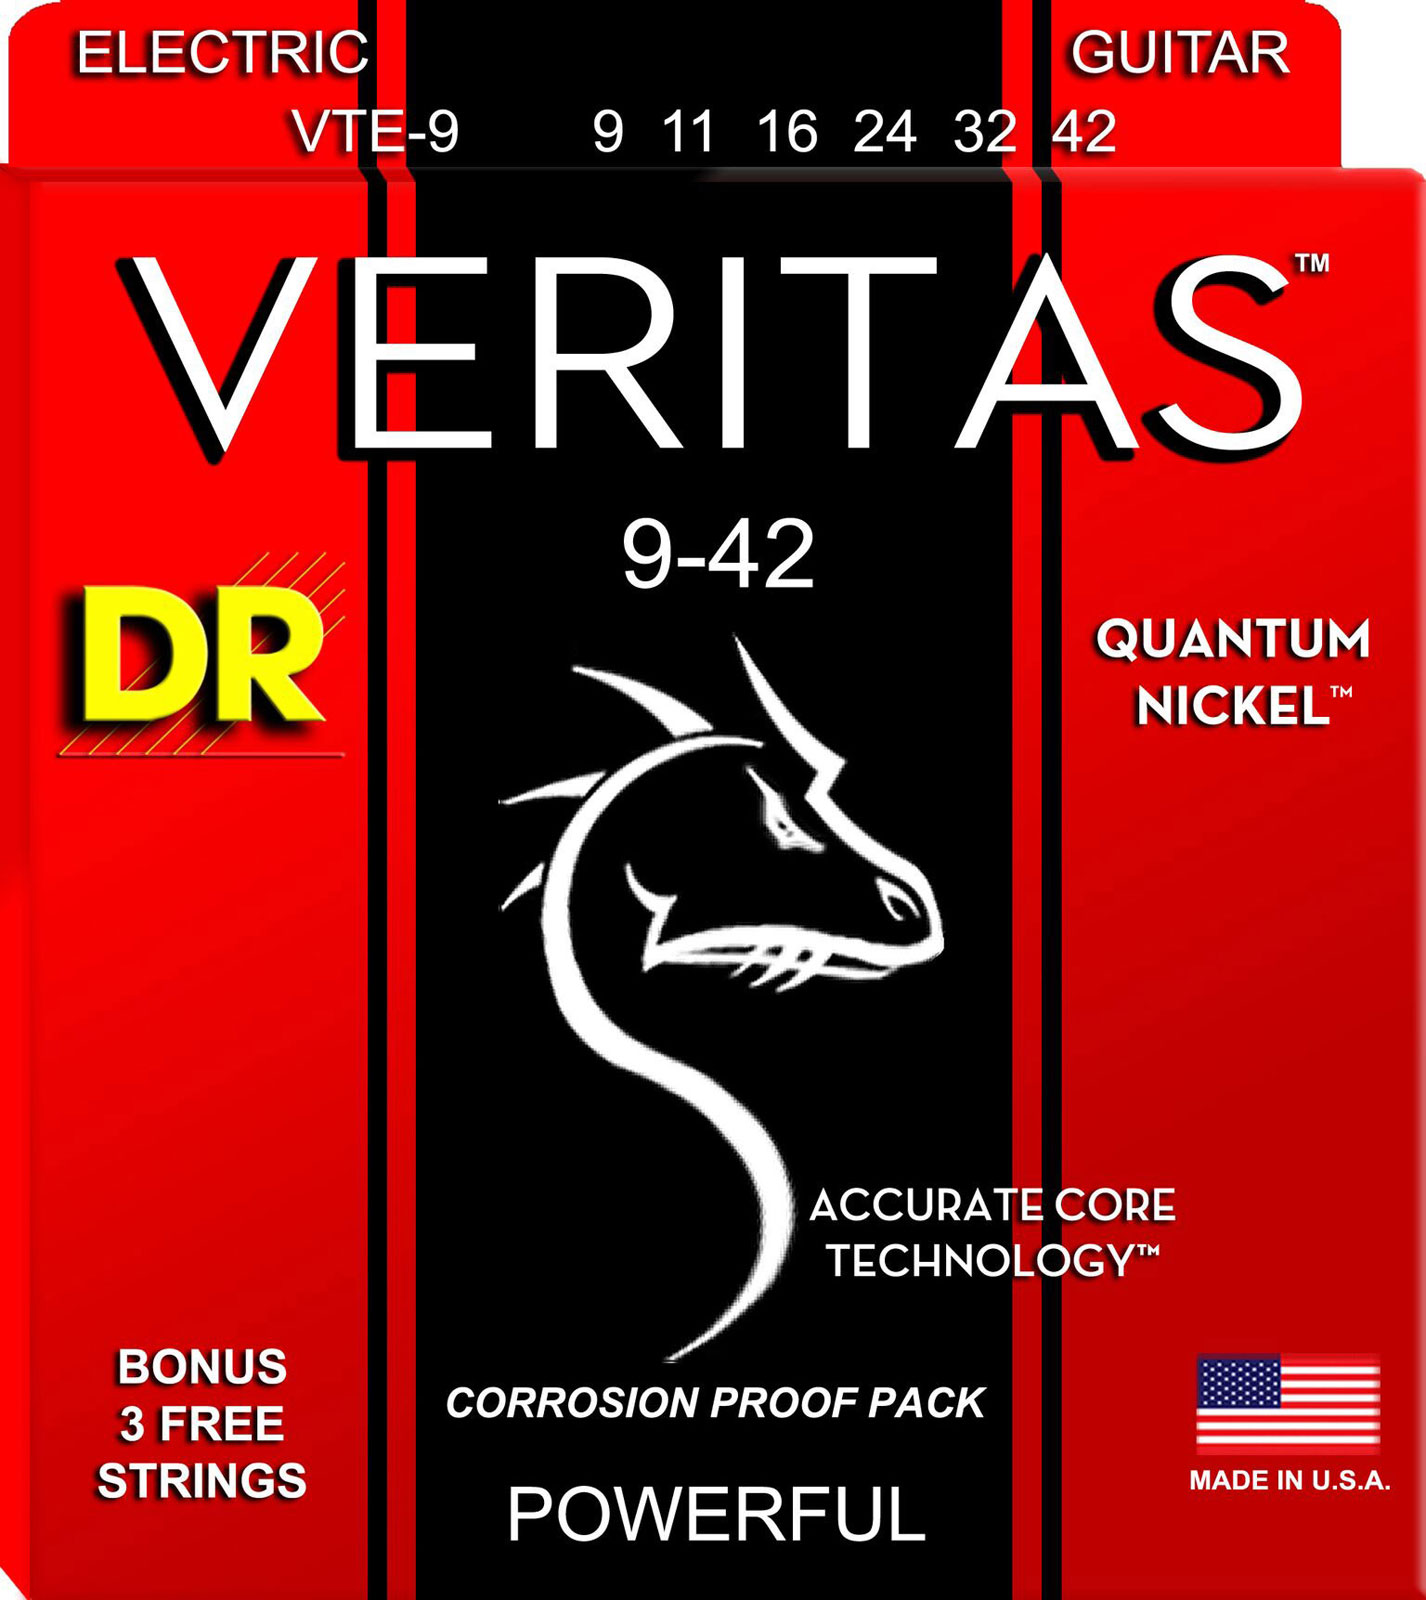 DR STRINGS 9-42 VTE-9 VERITAS